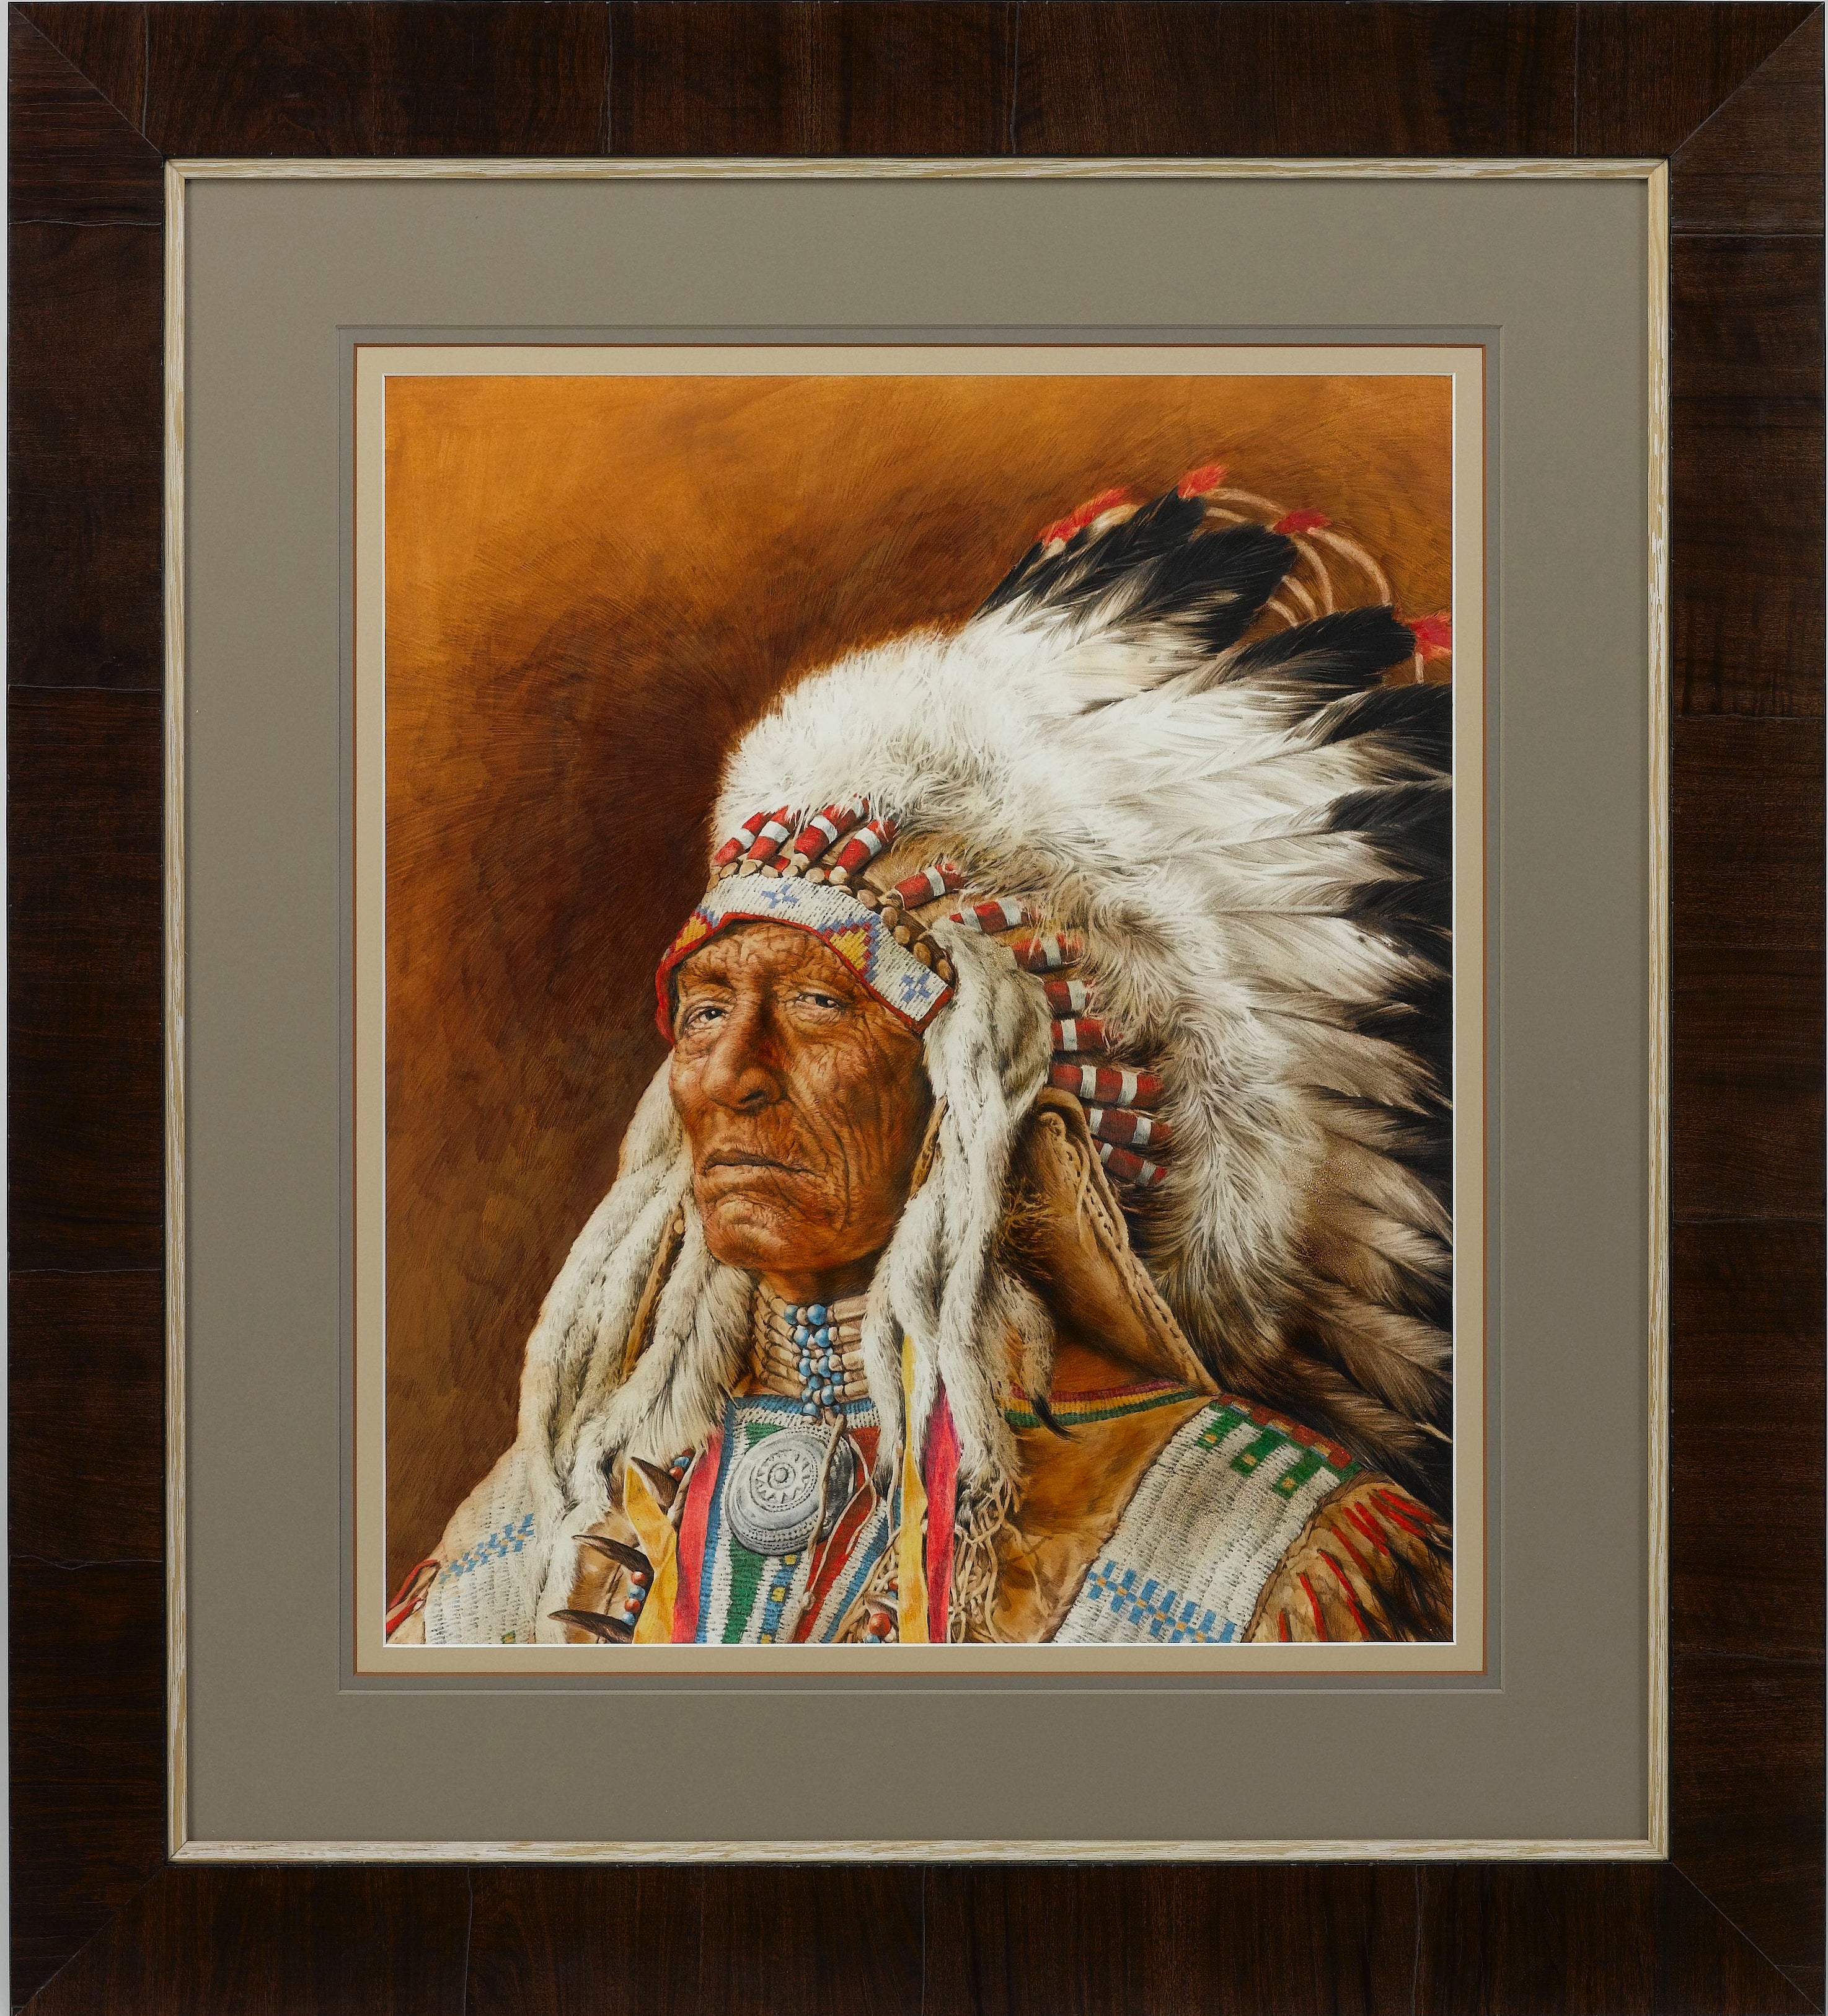 Art Depicting Native Americans